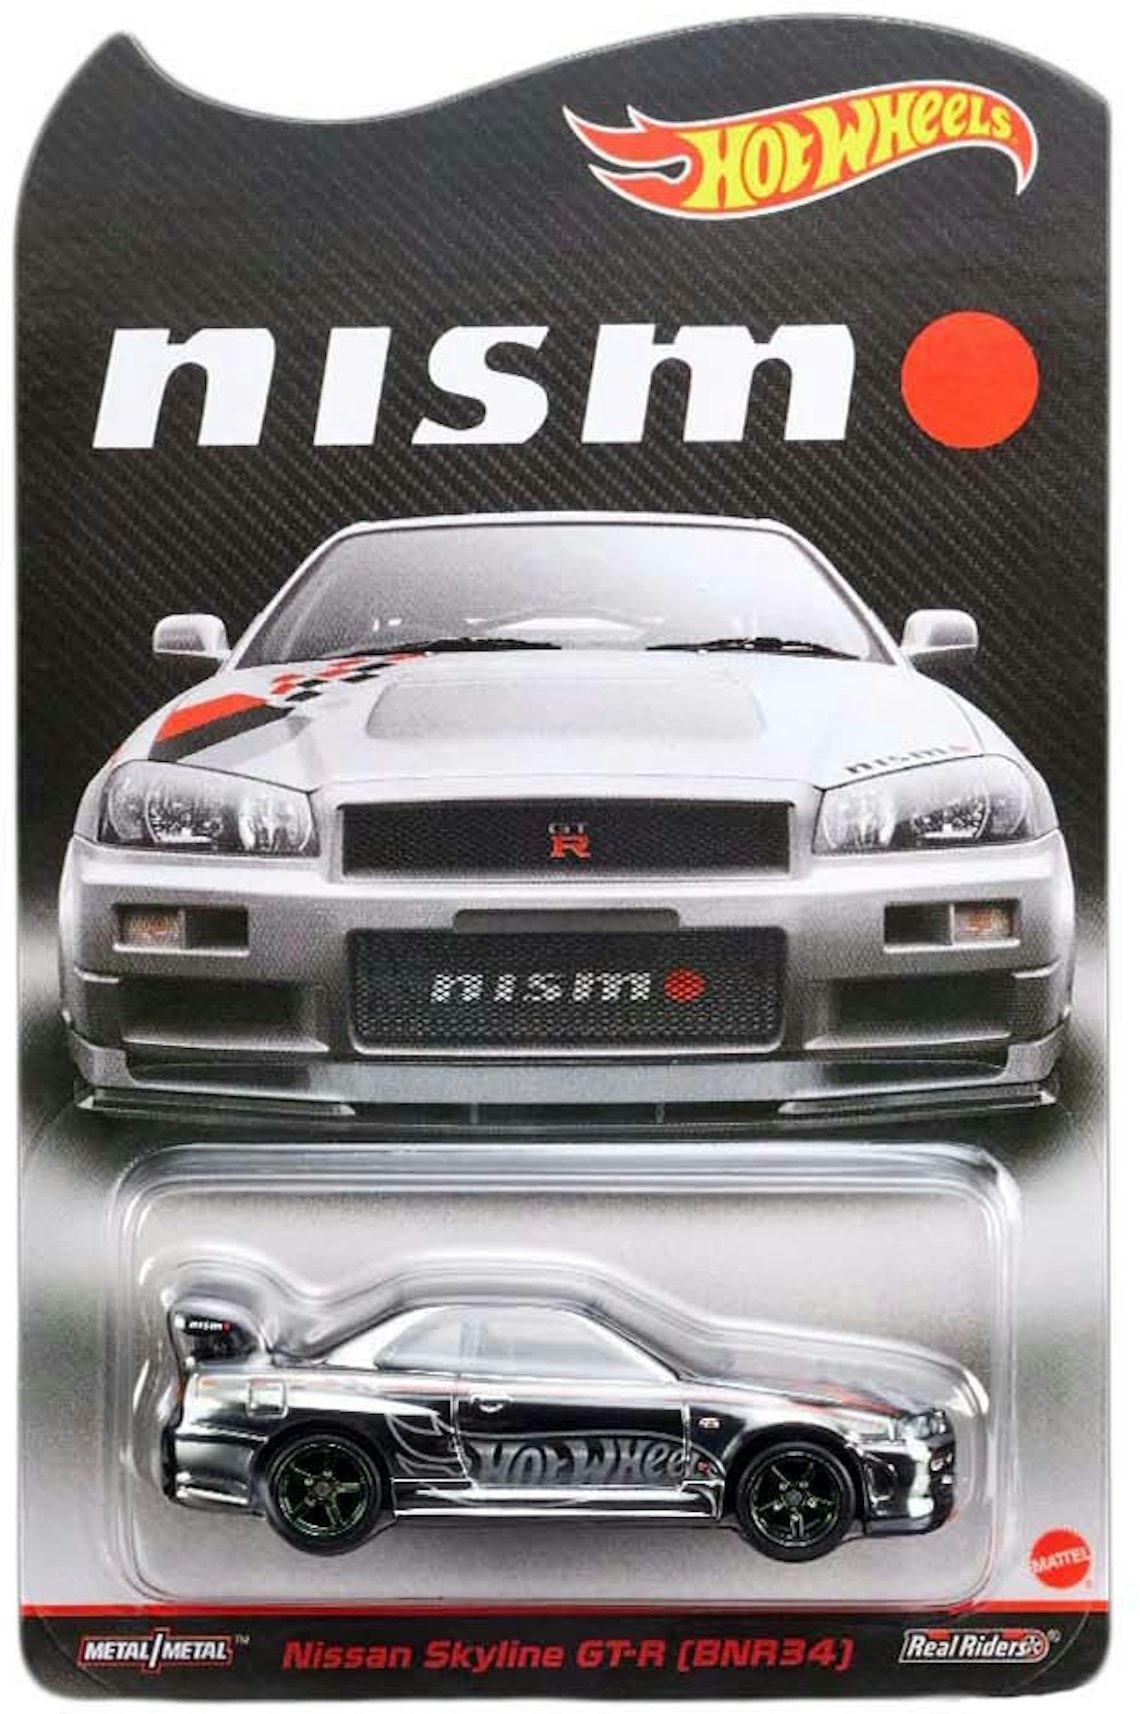 Nissan Skyline GT-R Reimagined By Artist For Modern Times